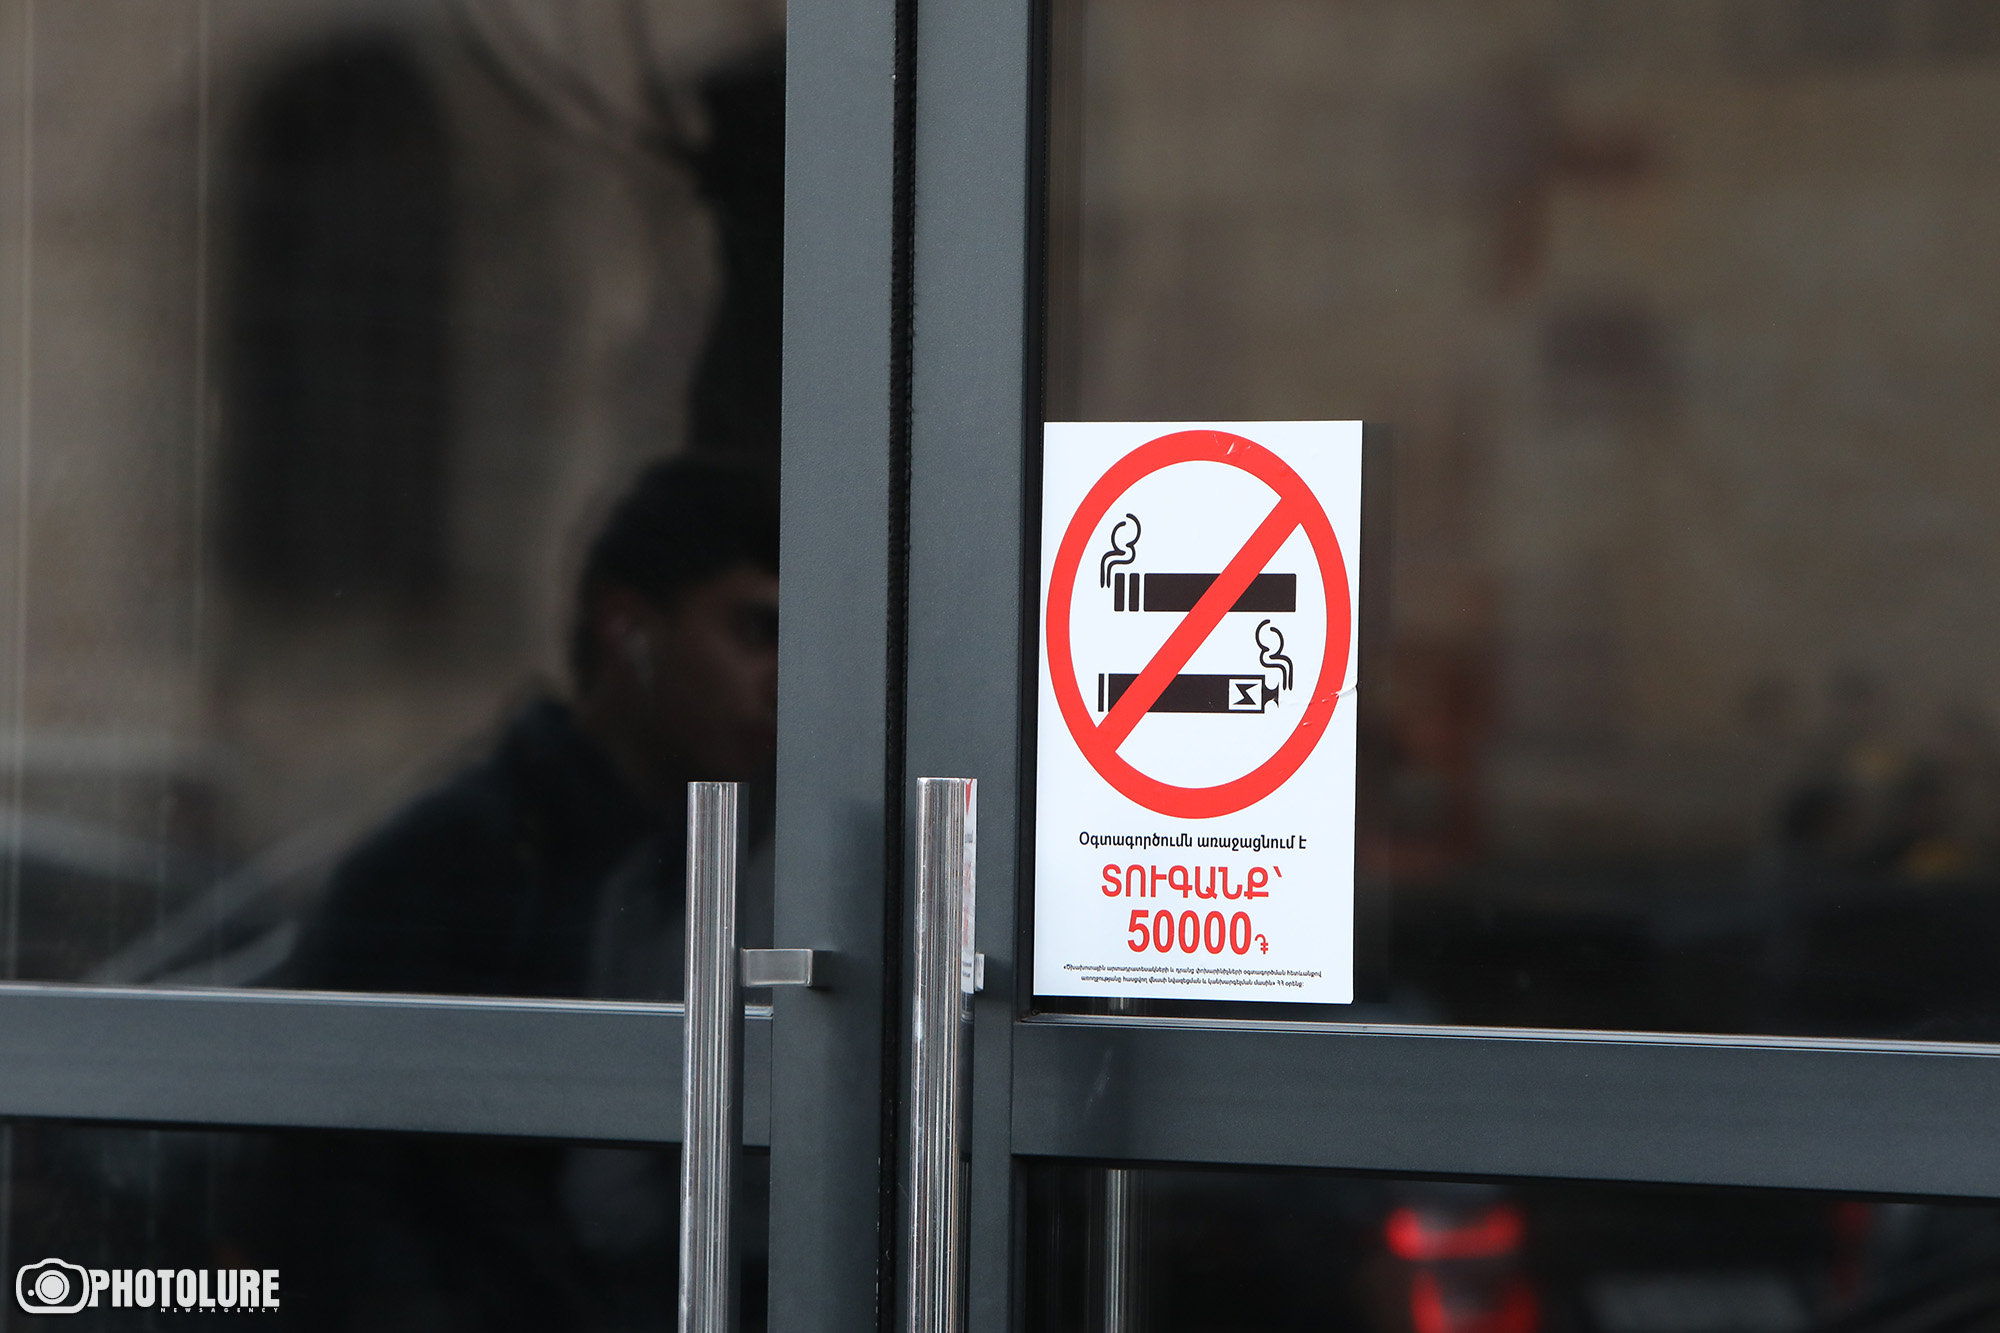 Public health experts urge more tobacco control efforts in Armenia